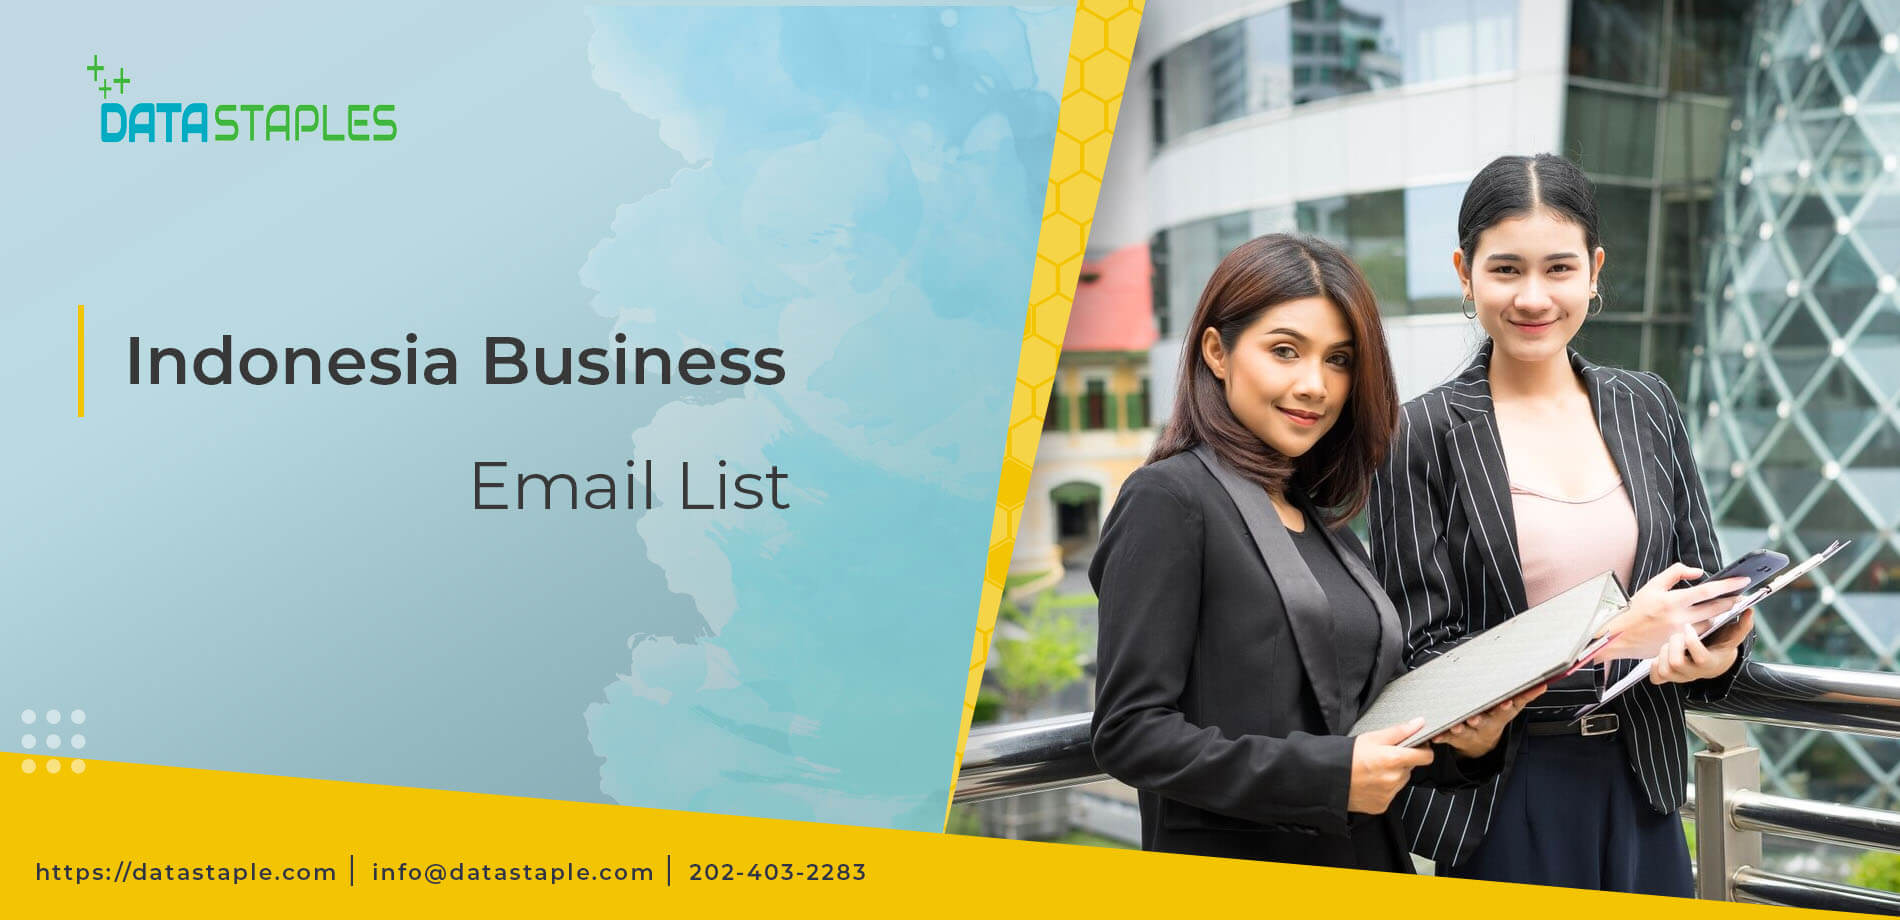 Indonesia Business Email List | DataStaples